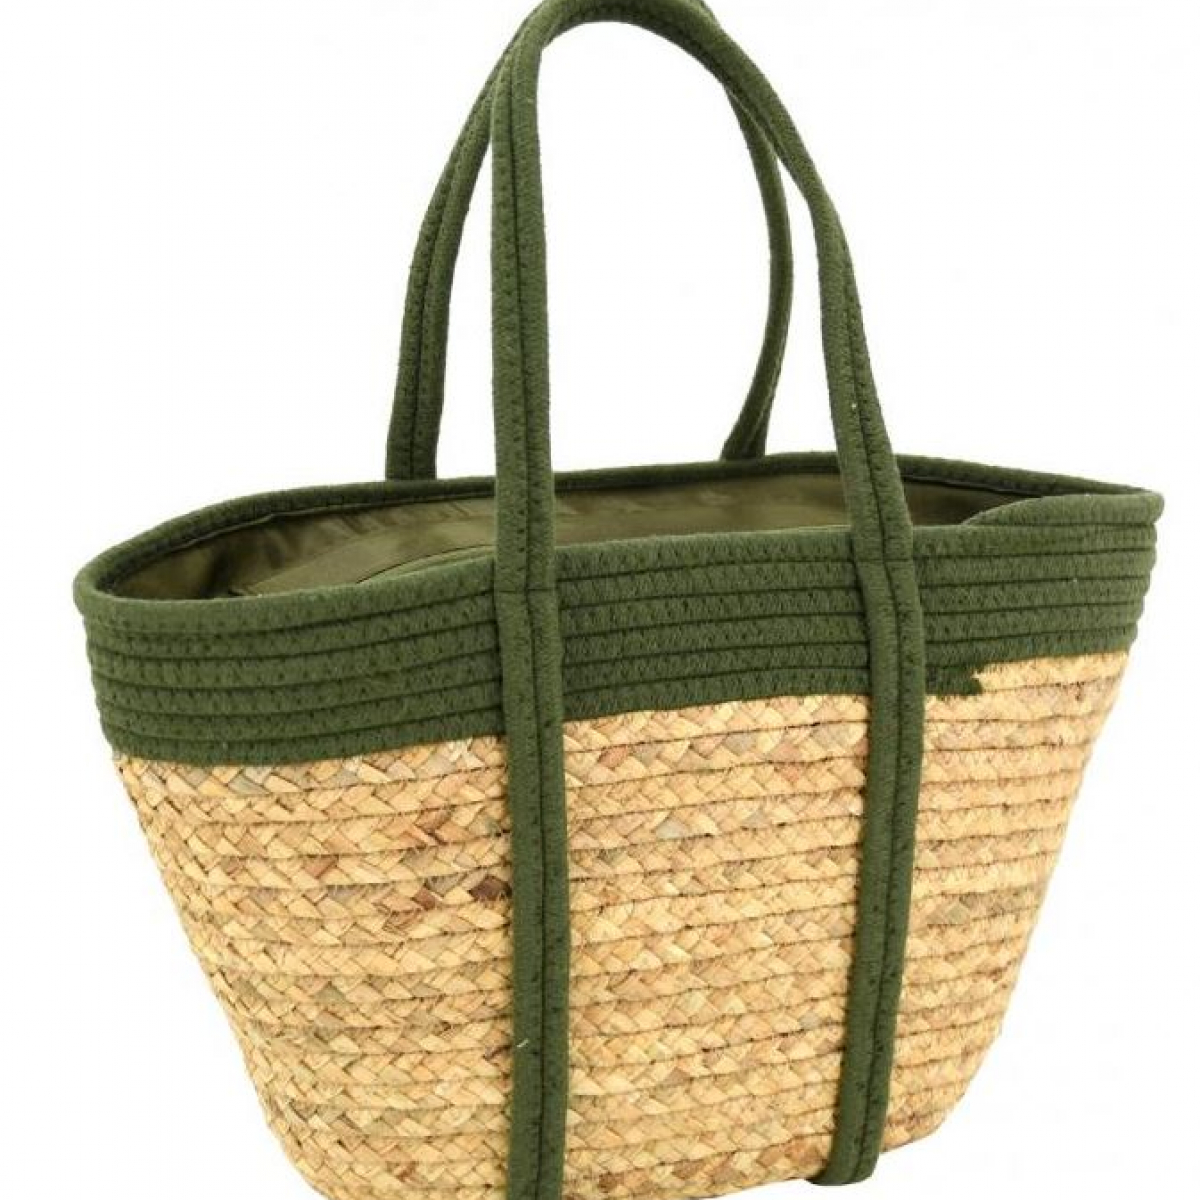 Khaki bag in natural hyacinth